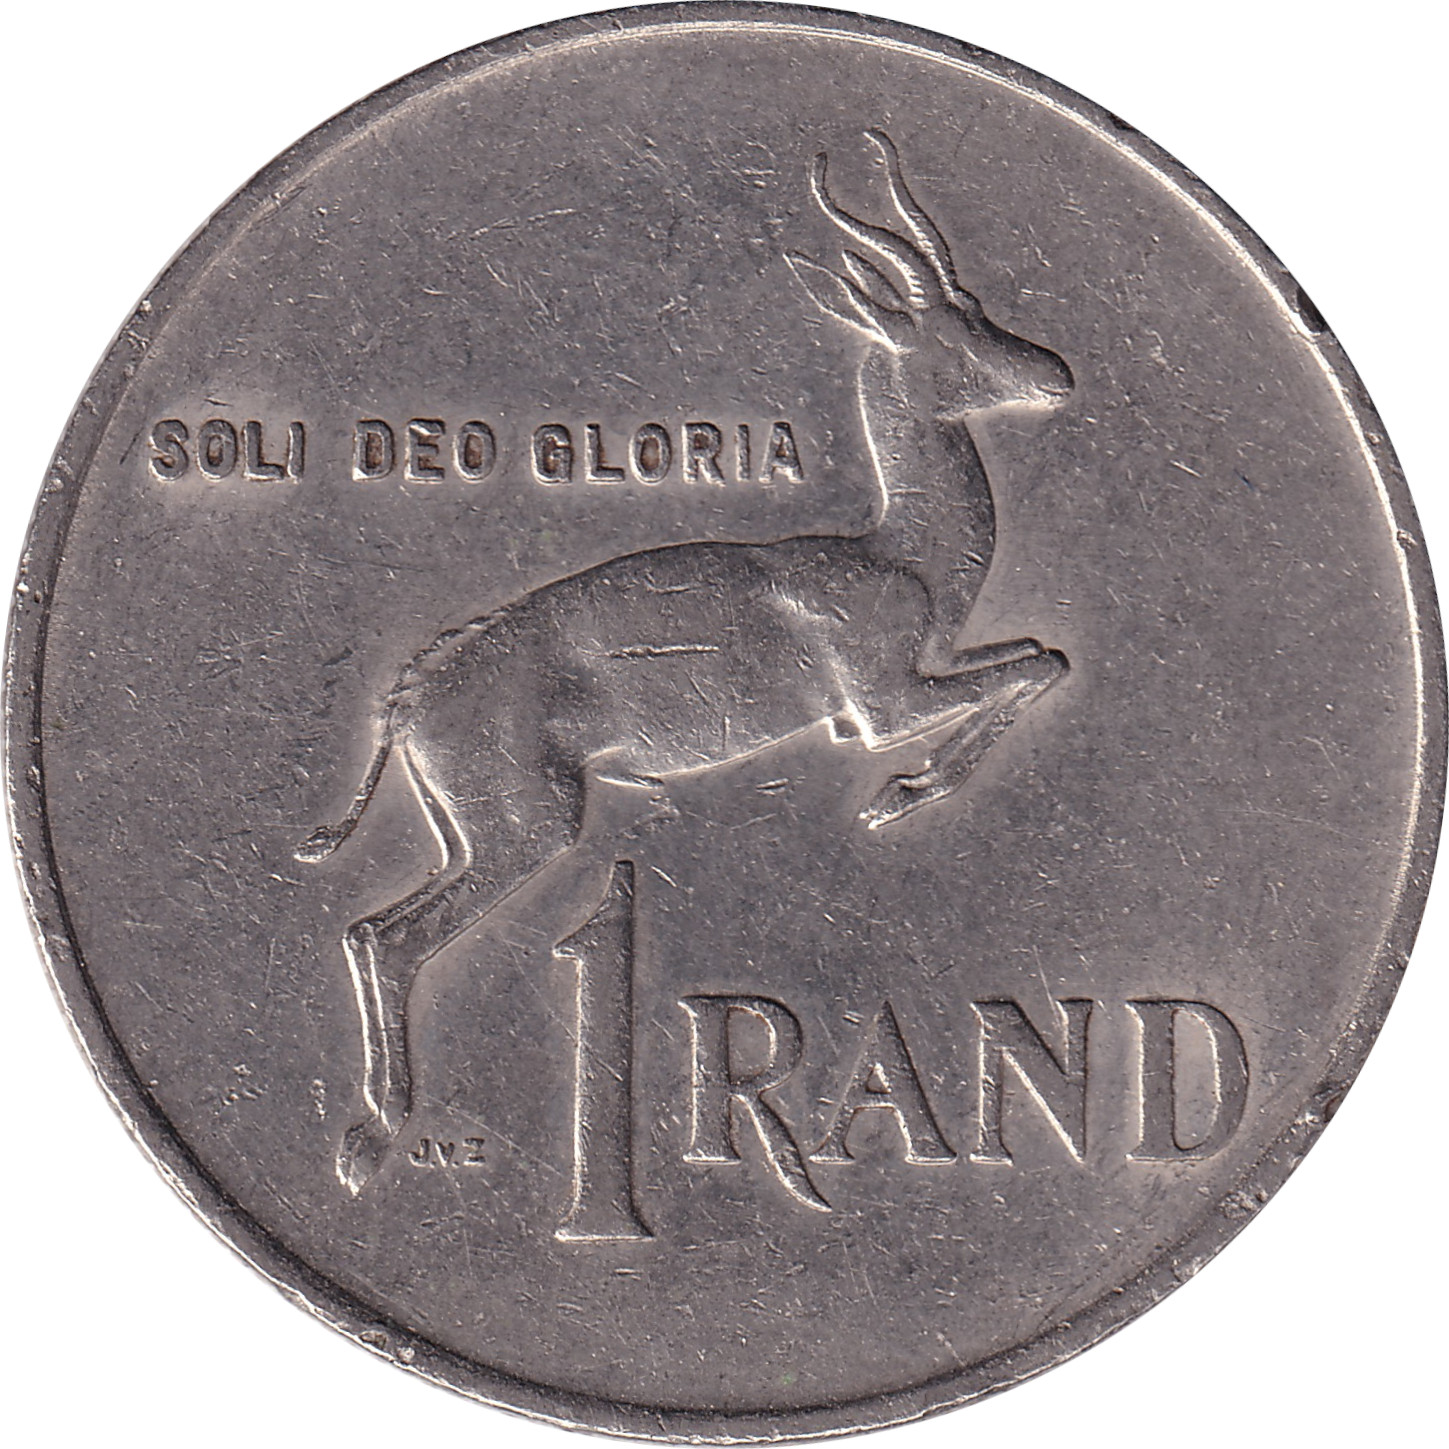 1 rand - Armoiries - Nickel